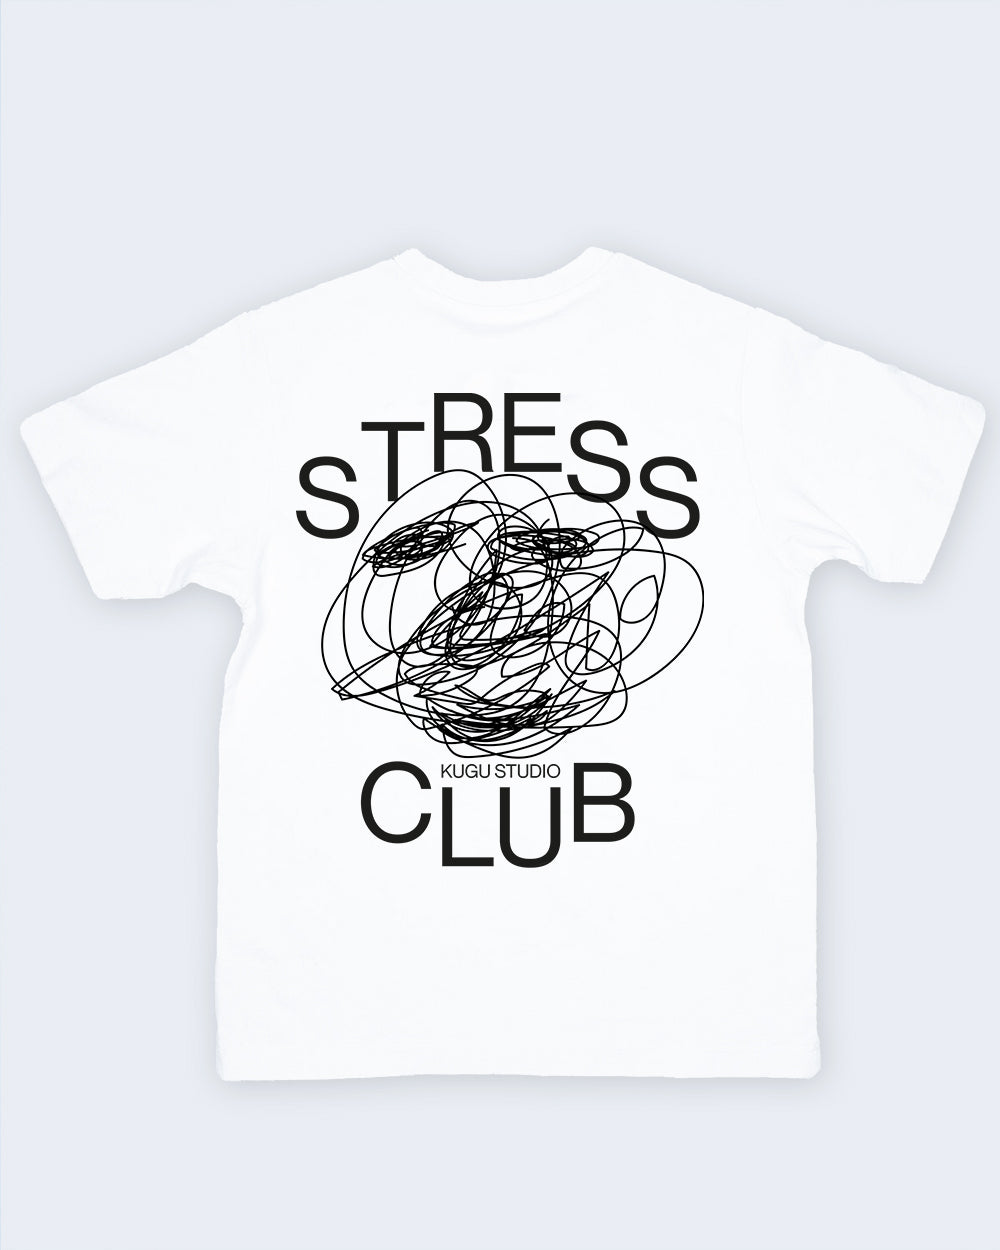 STRESS CLUB Shirt by KUGU Studio